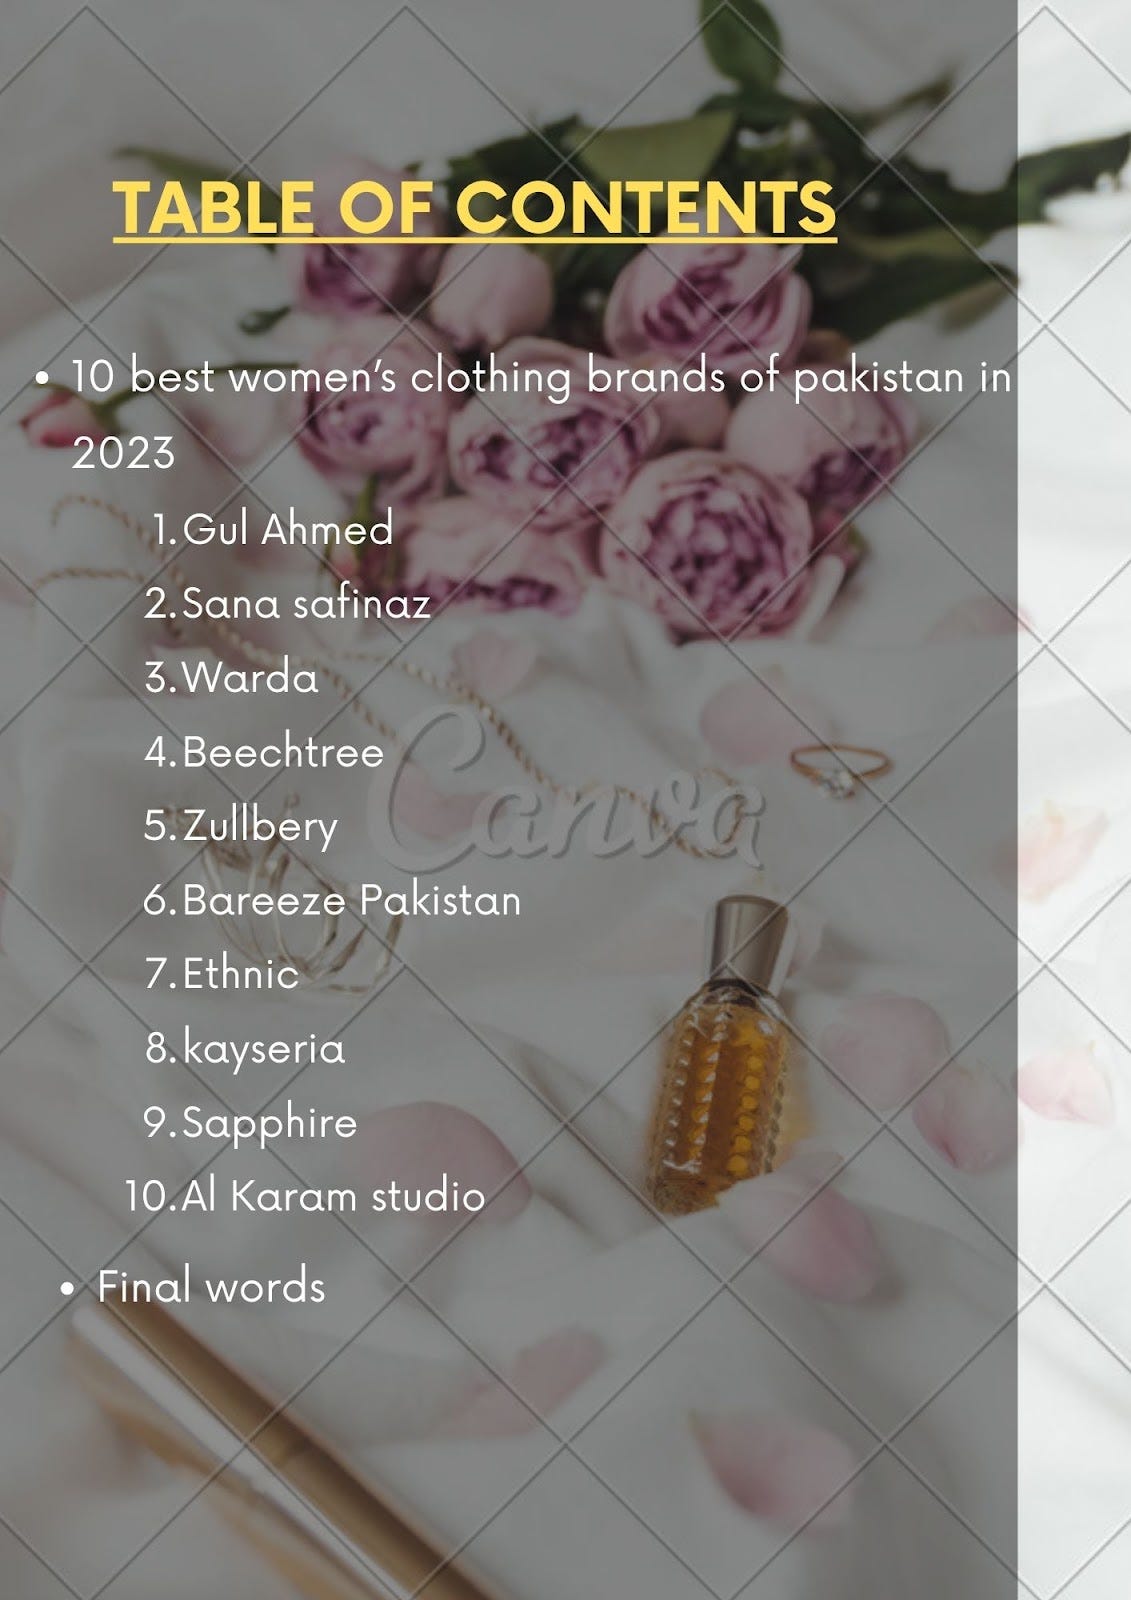 10 Best women's clothing brands of Pakistan in 2023